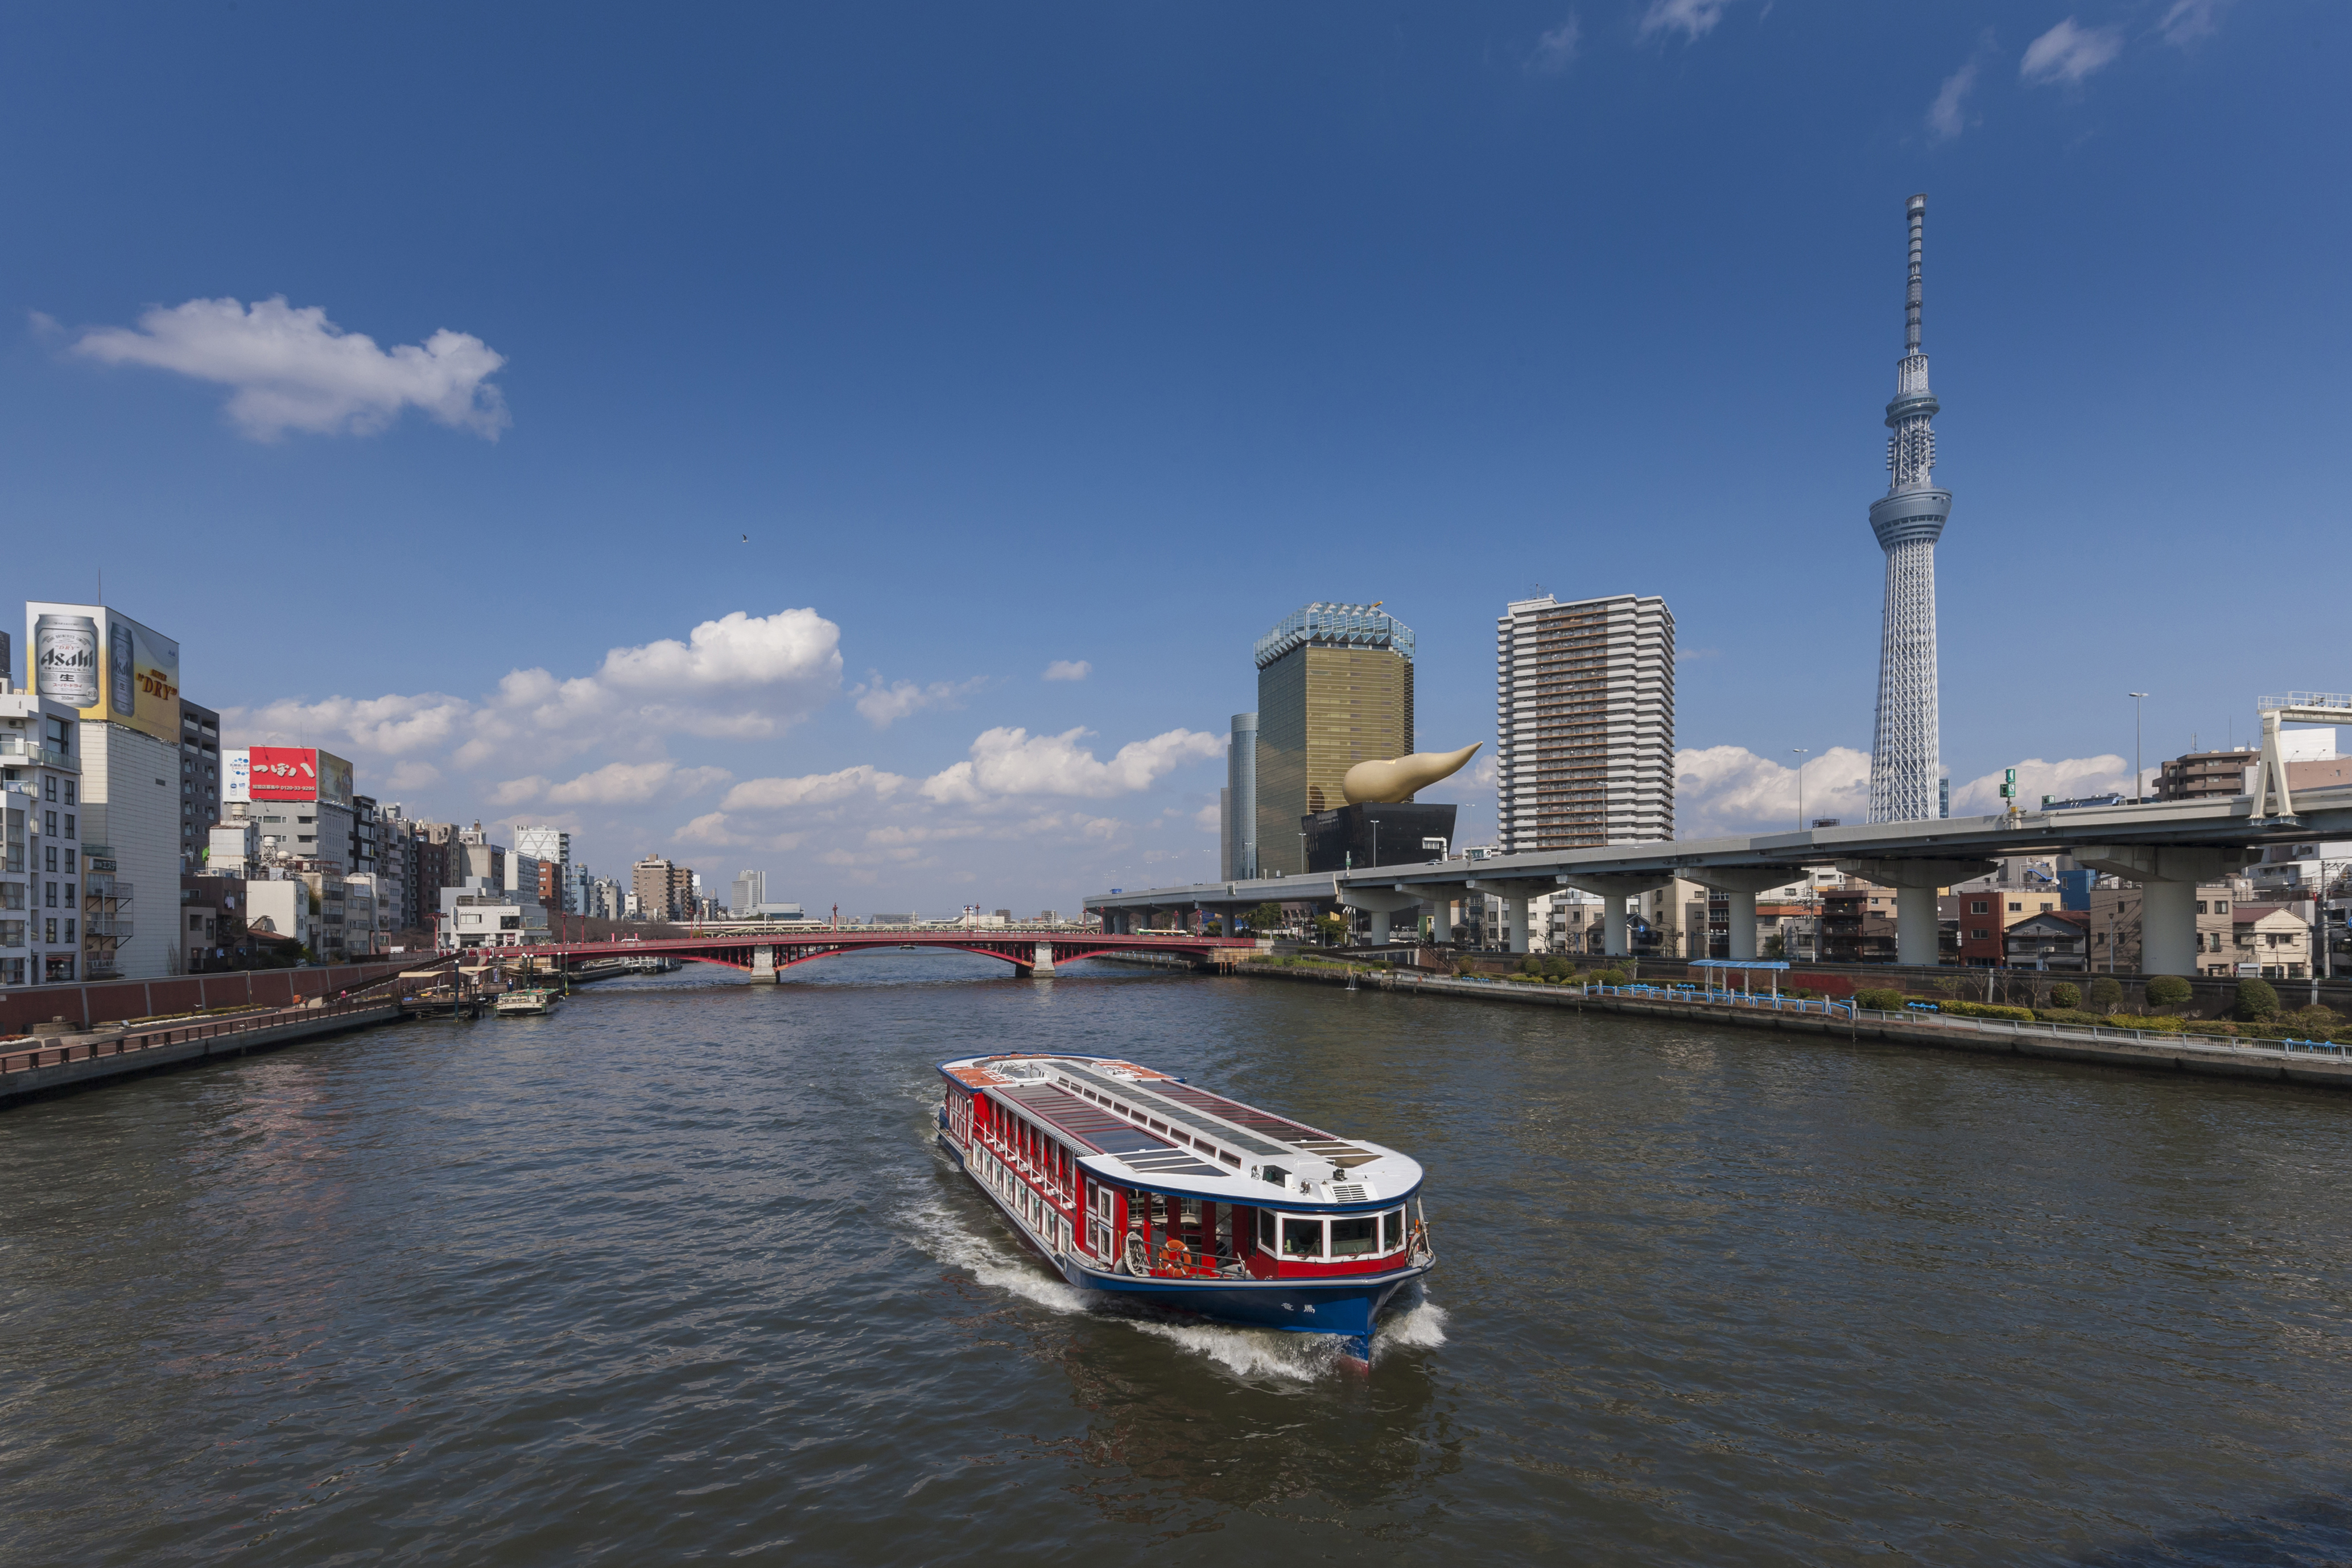 Sumidagawa River Cruise